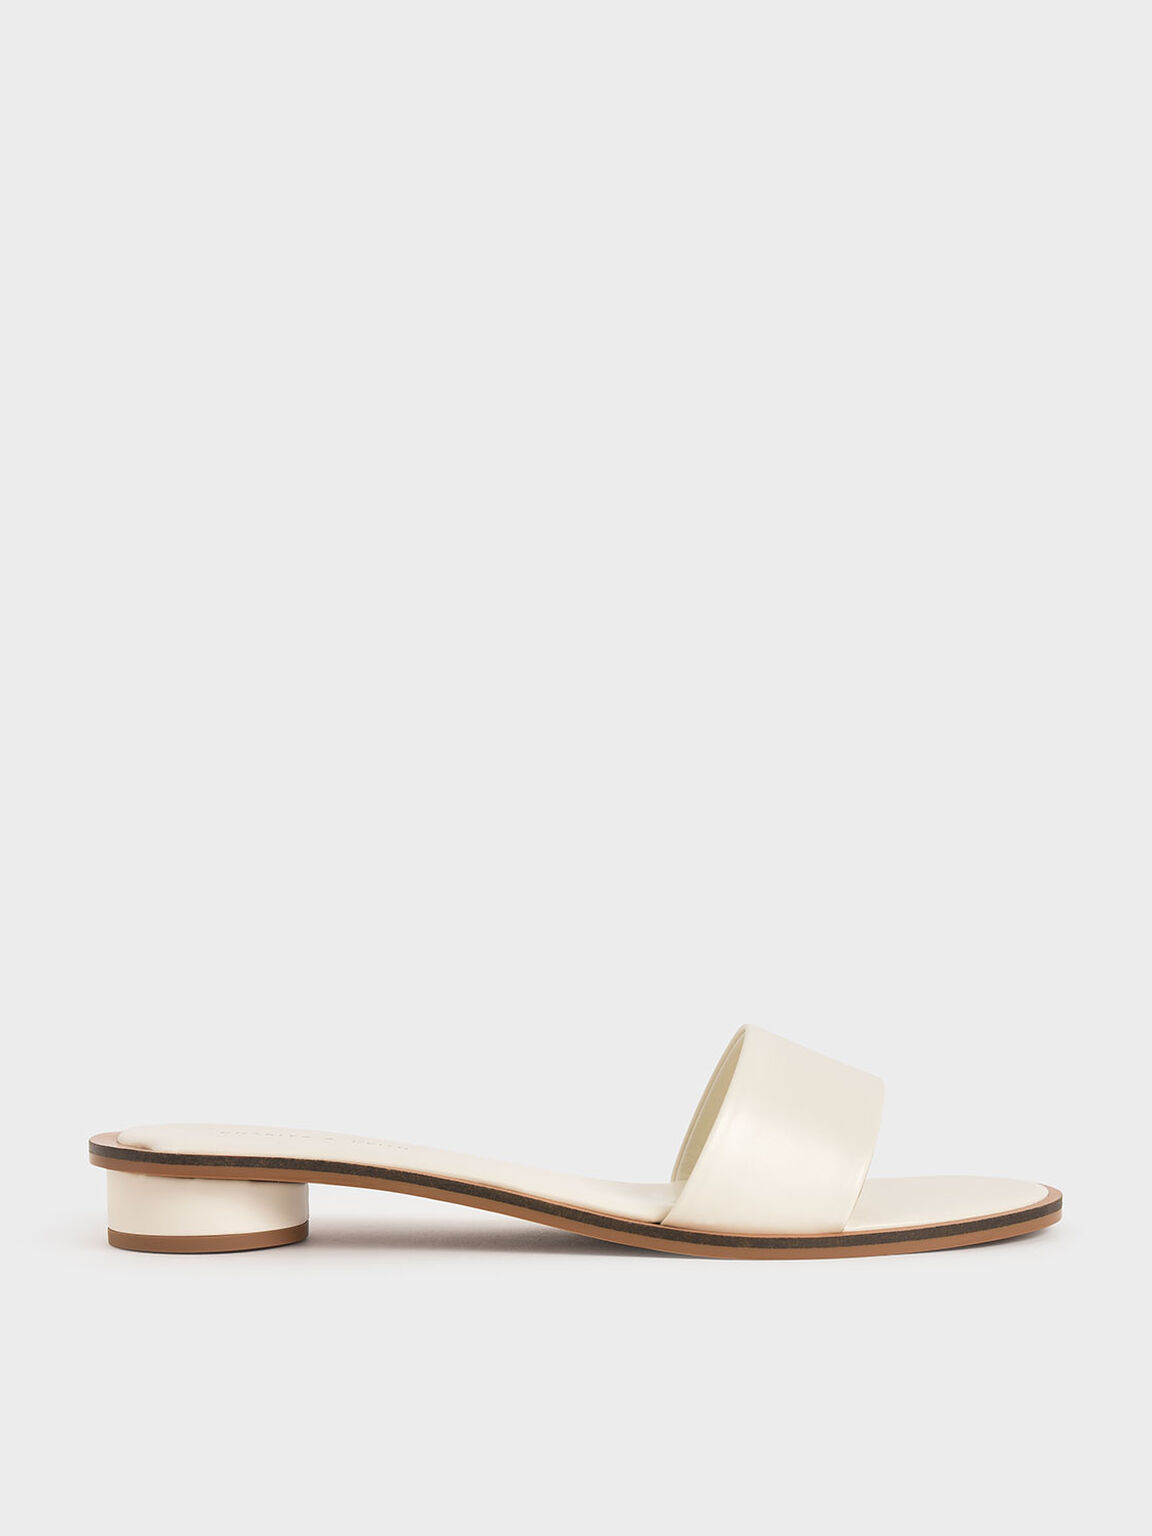 Sandal Two-Tone Slide, Cream, hi-res